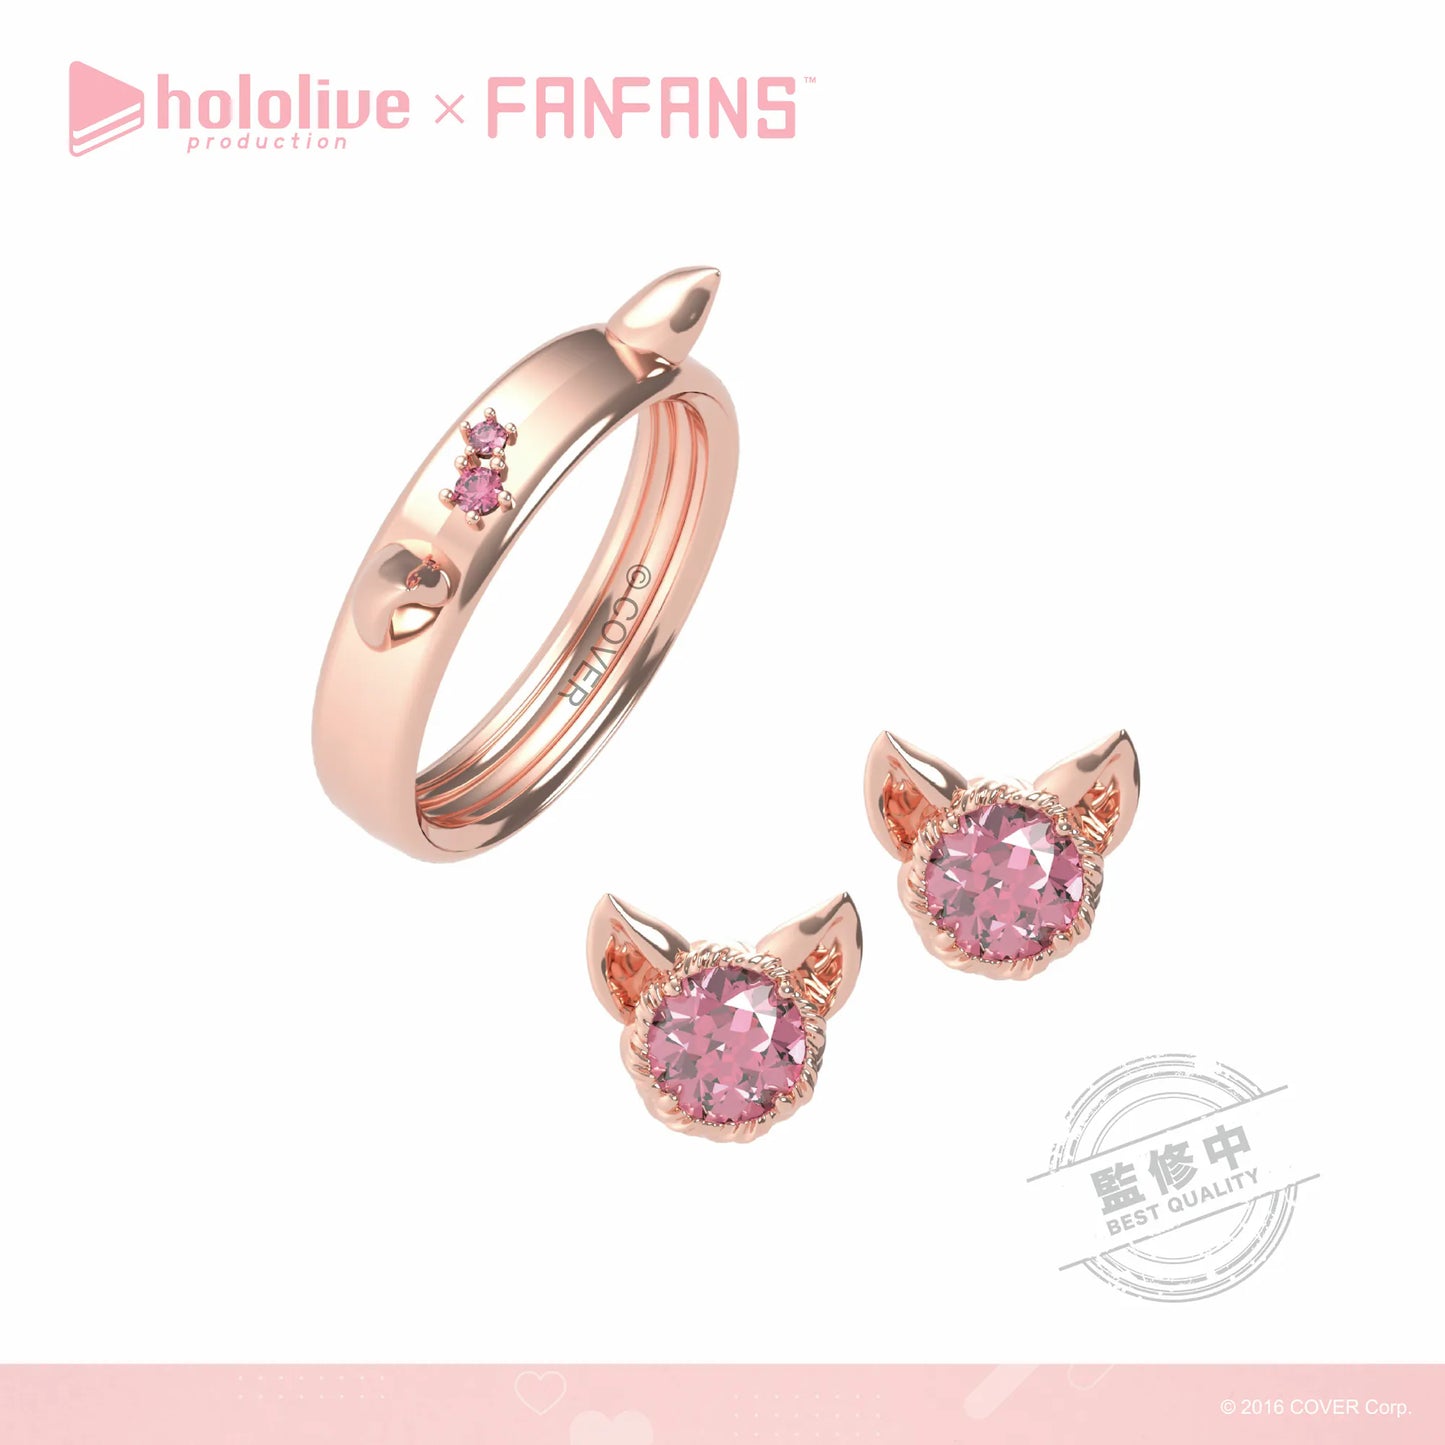 [pre-order] hololive x FanFans Cafe vol.2 - Gen 3 /holoX  - earrings/rings